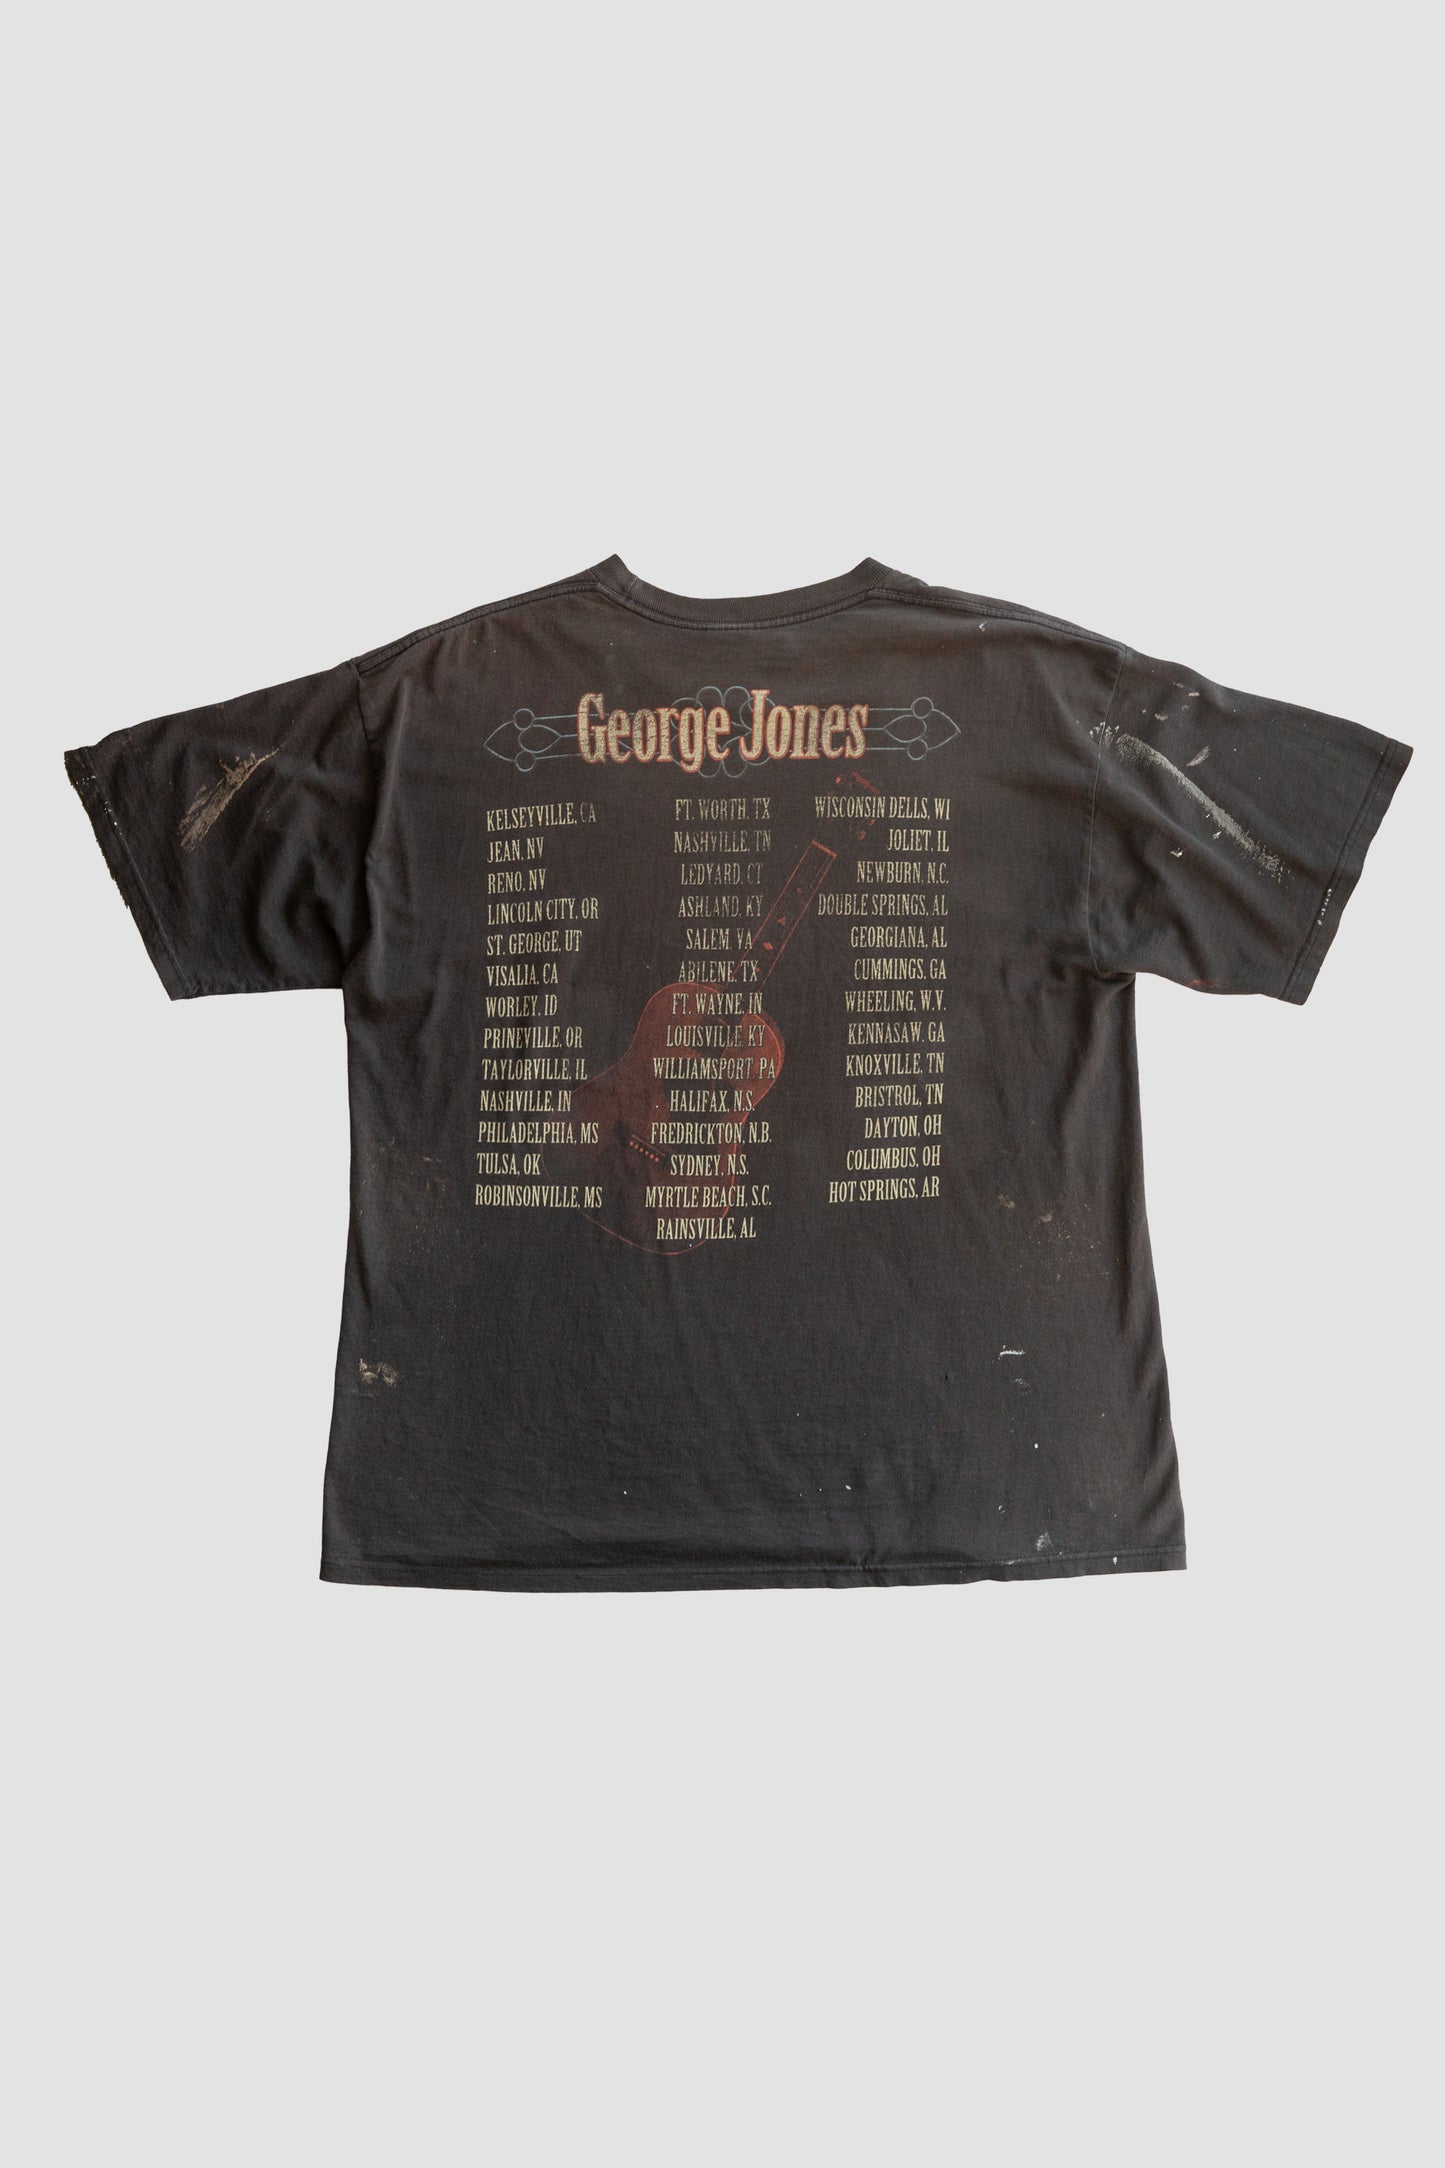 George Jones Live To Tell it All Tee